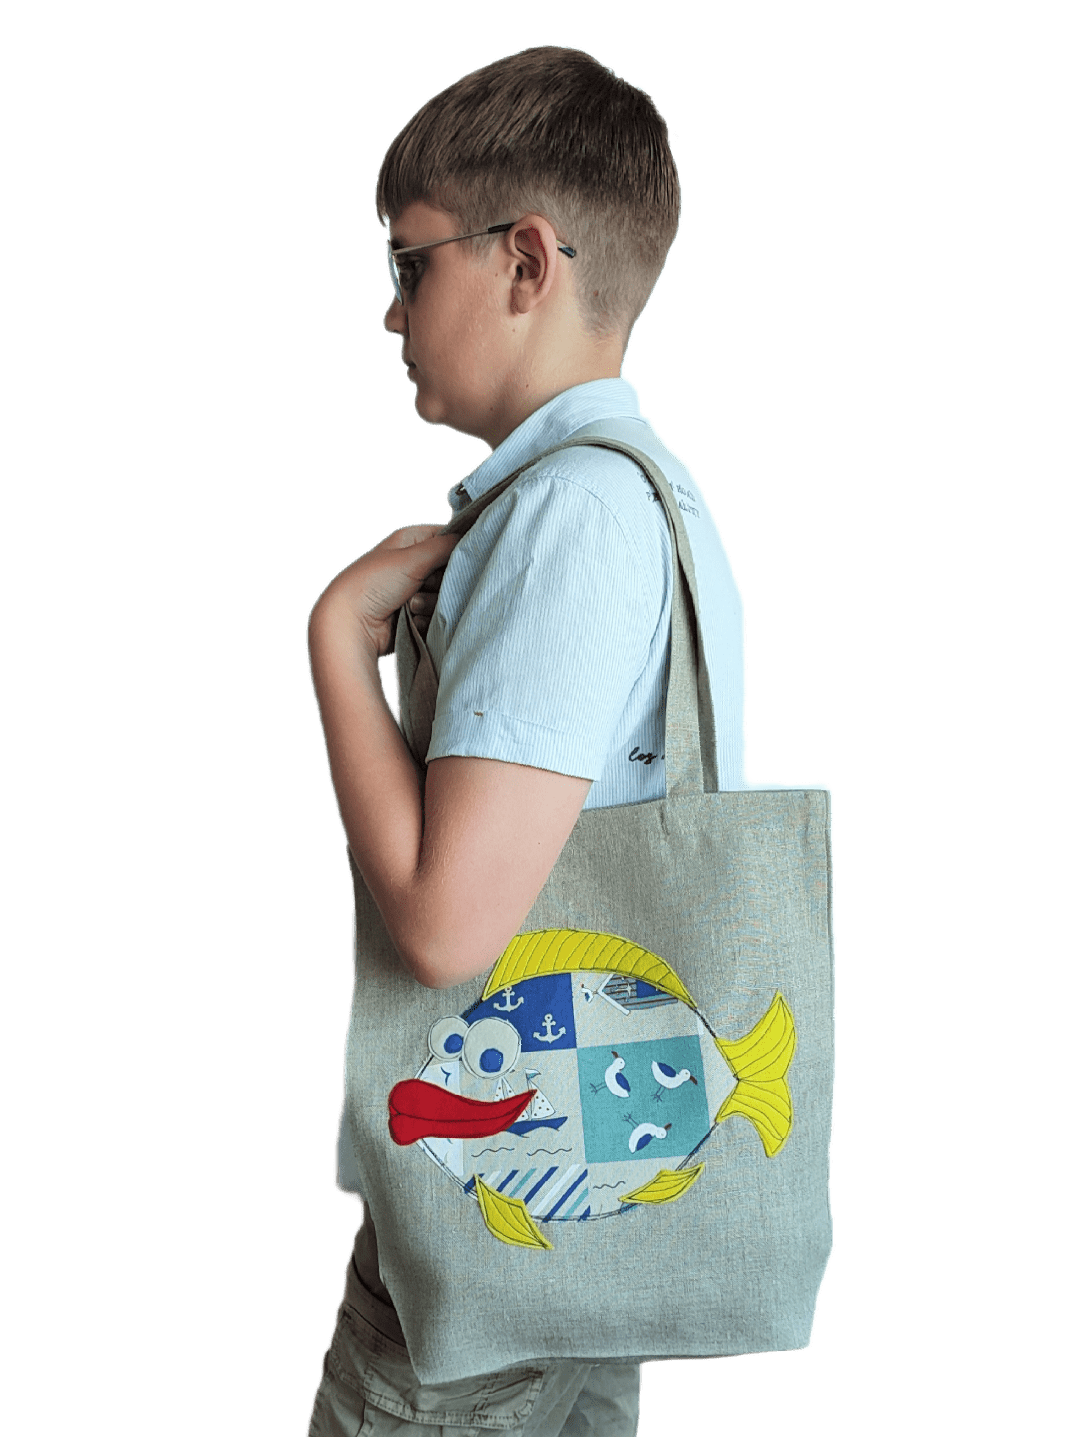 Shopping bag FISH - Linen4me